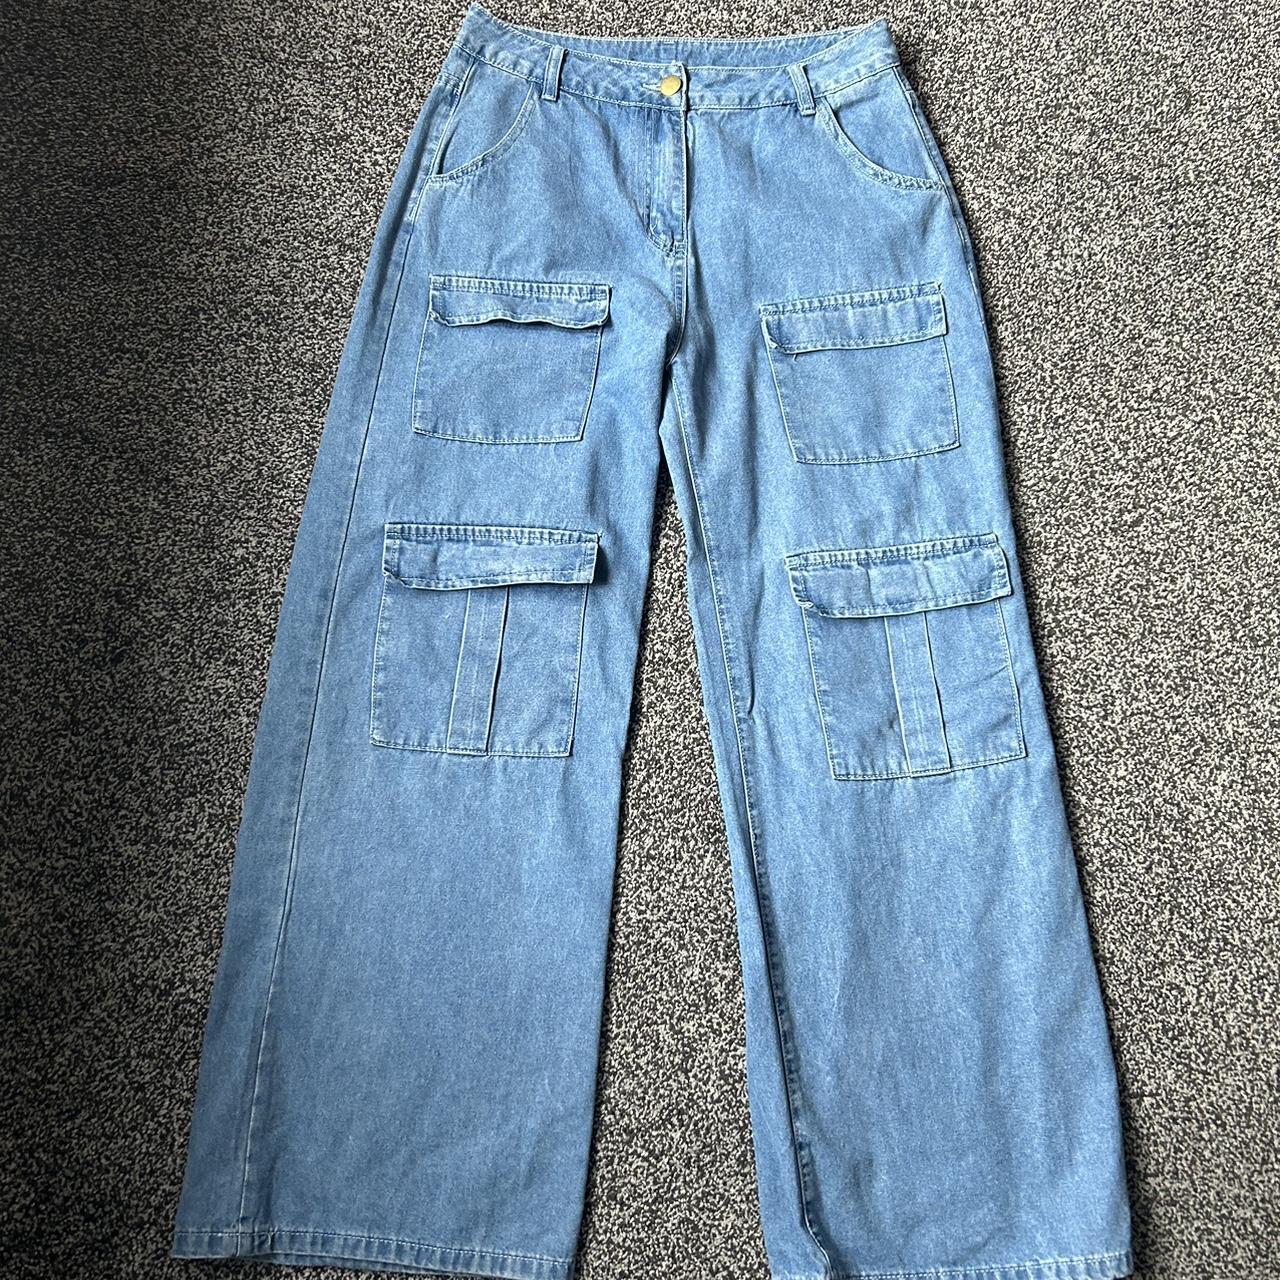 Denim cargo jeans 29 waist Never worn - Depop